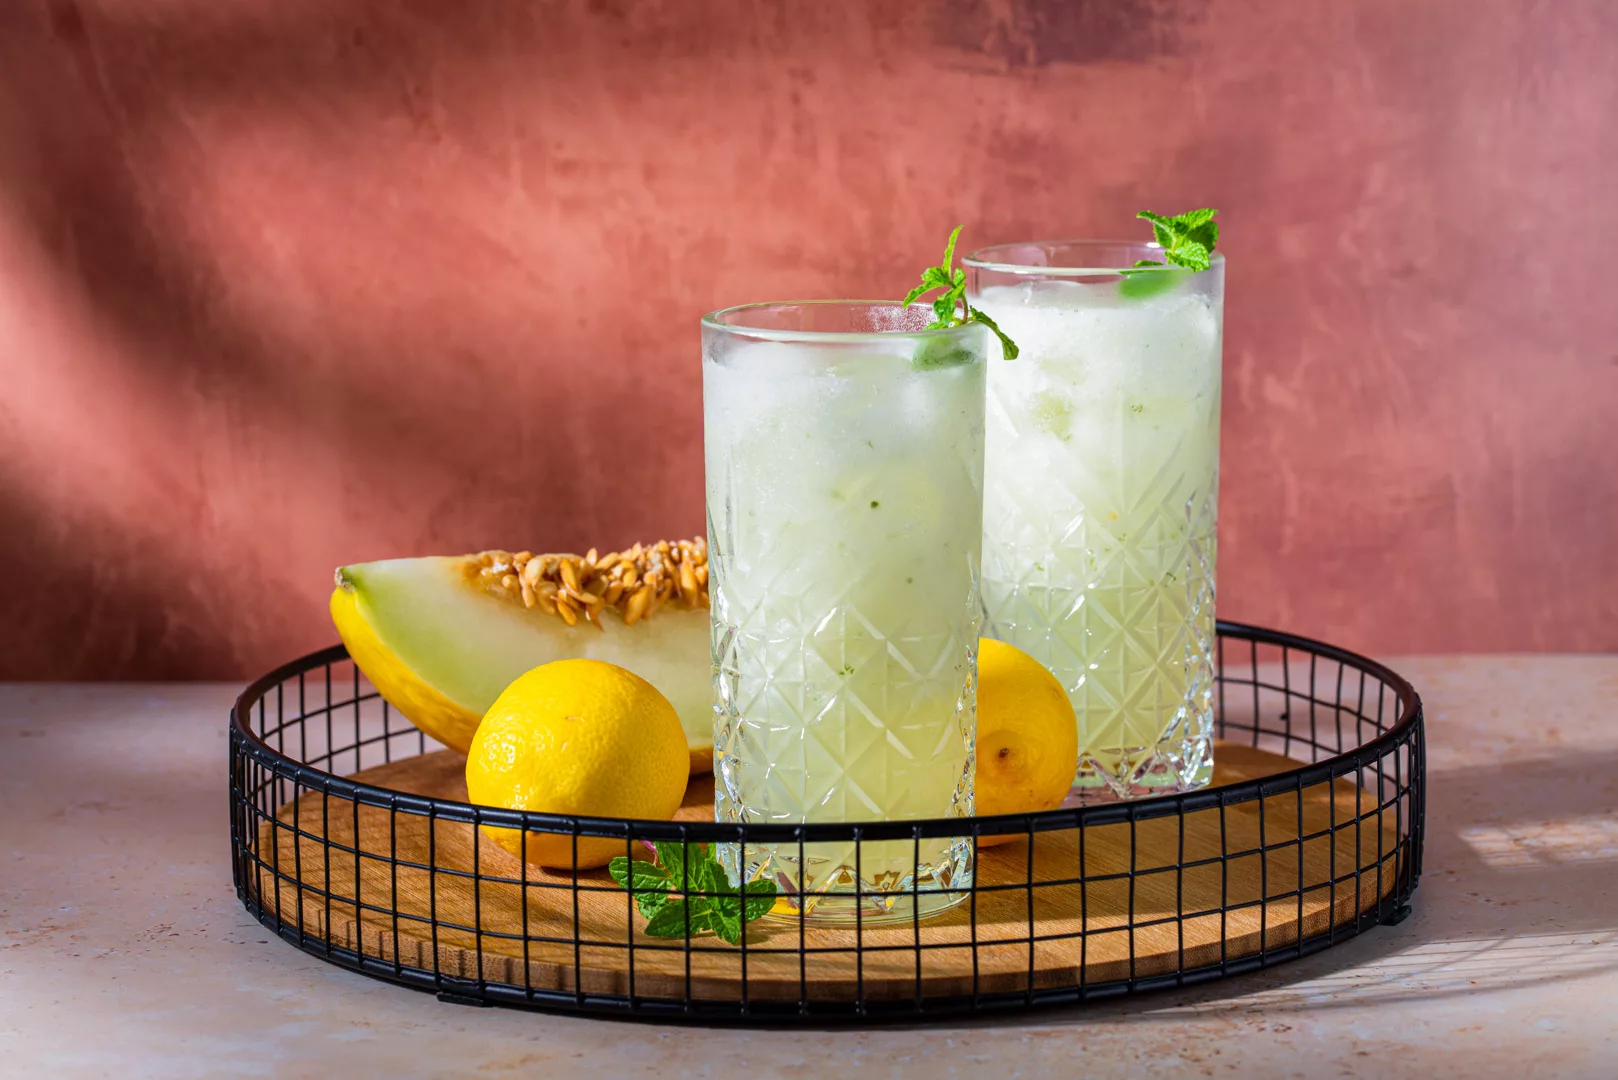 basket with glasses of cantaloupe and lemon juice